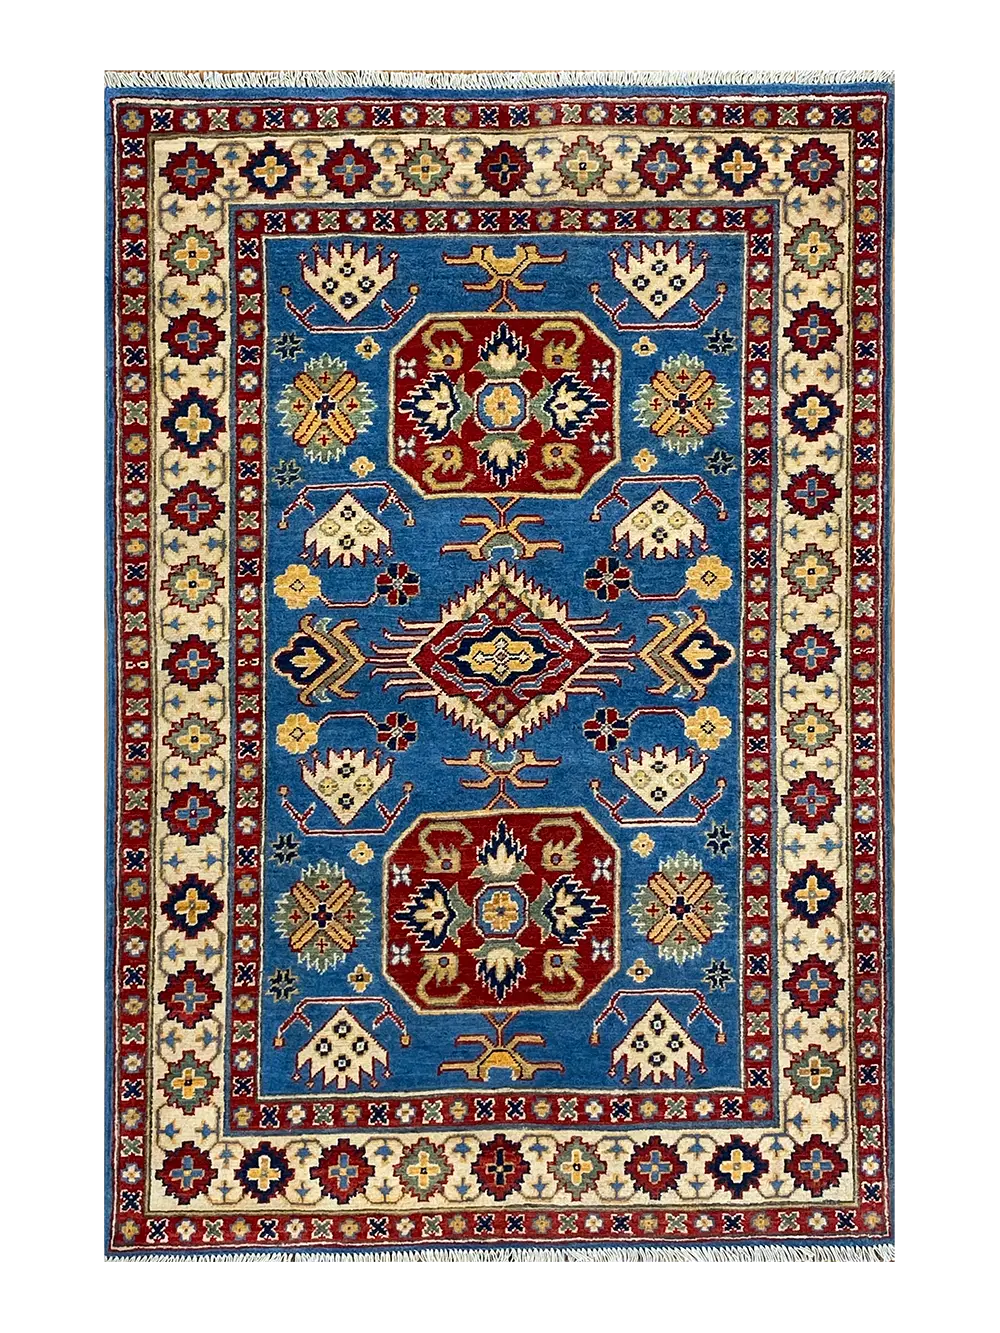 Kazak 4' x 5' 10" Handmade Area Rug